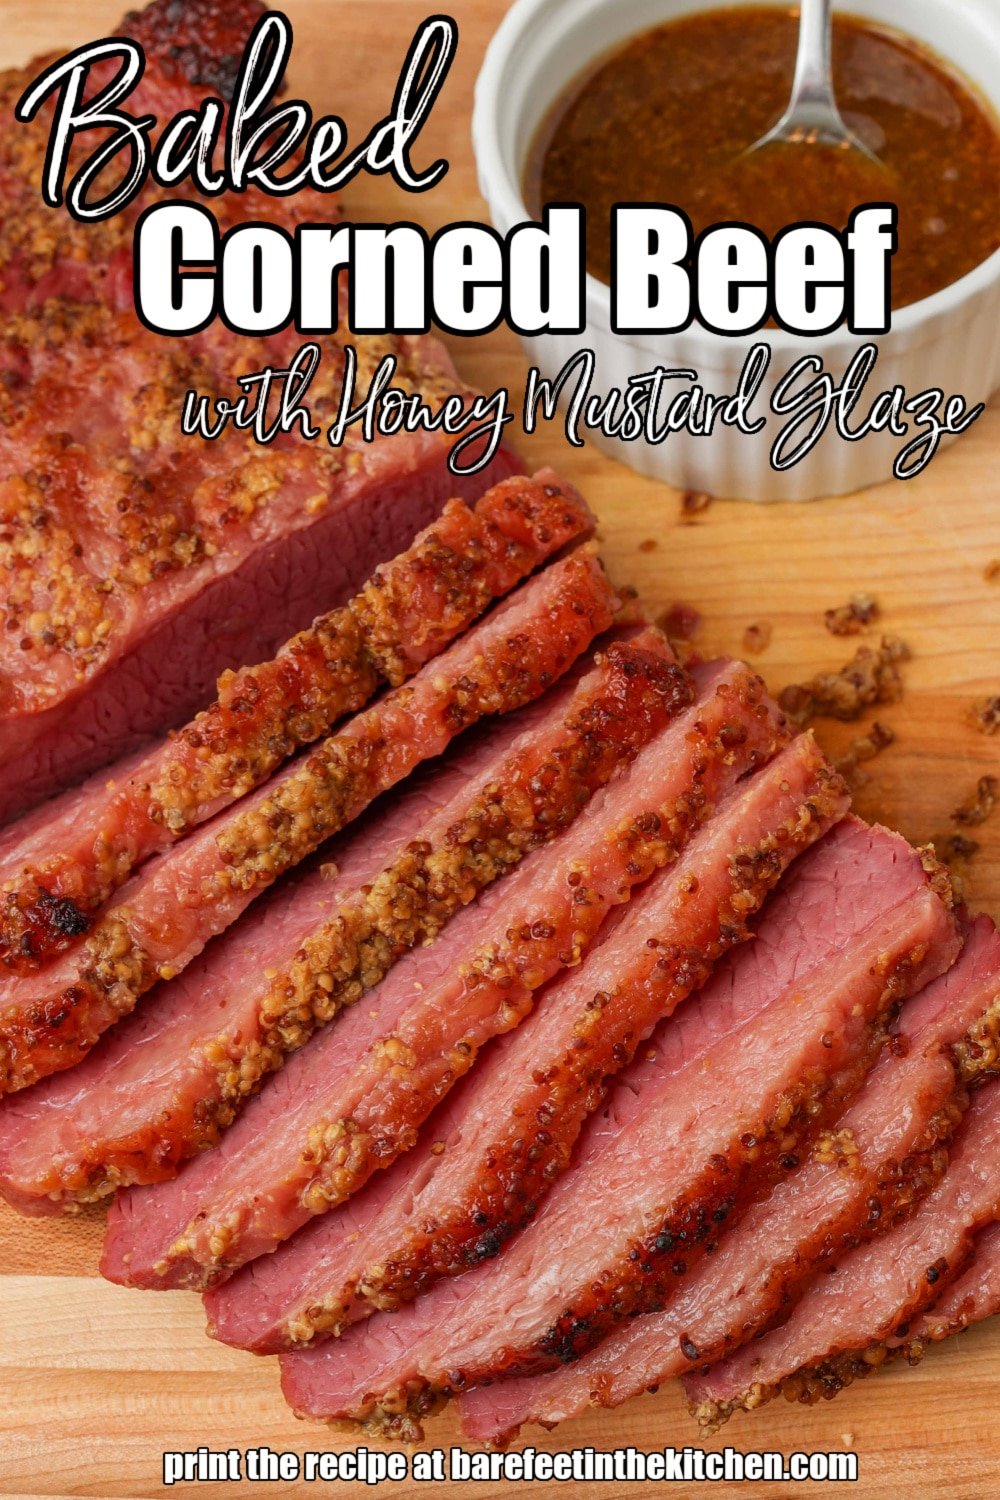 Baked Corned Beef with Honey Mustard Glaze - MyTrendMart